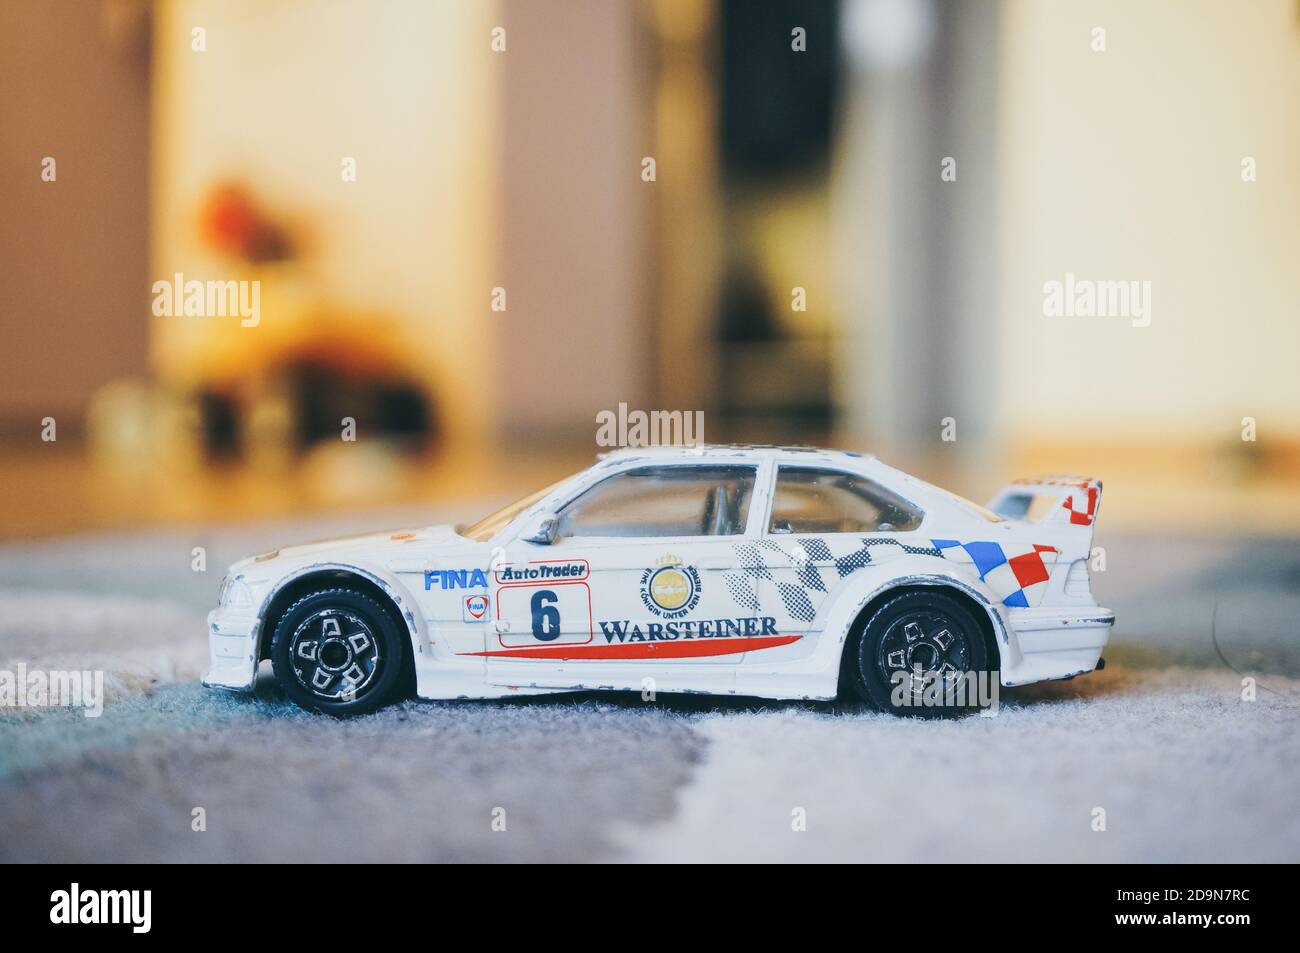 POZNAN, POLAND - Nov 13, 2016: Bburago toy model BMW car on carpet Stock Photo - Alamy